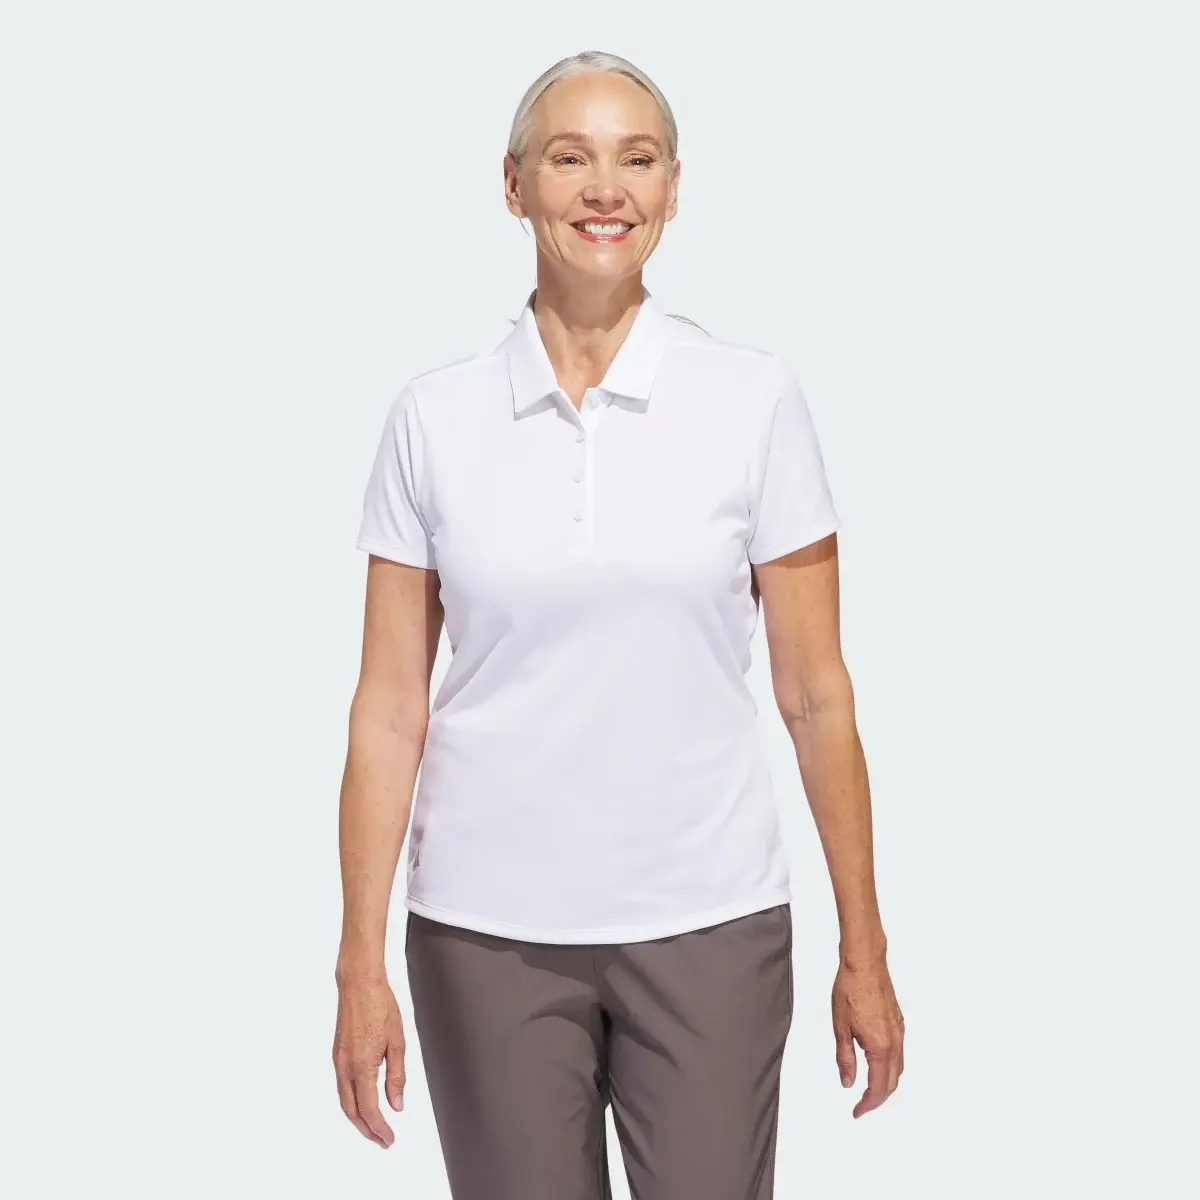 Adidas Women's Solid Performance Short Sleeve Polo Shirt. 2